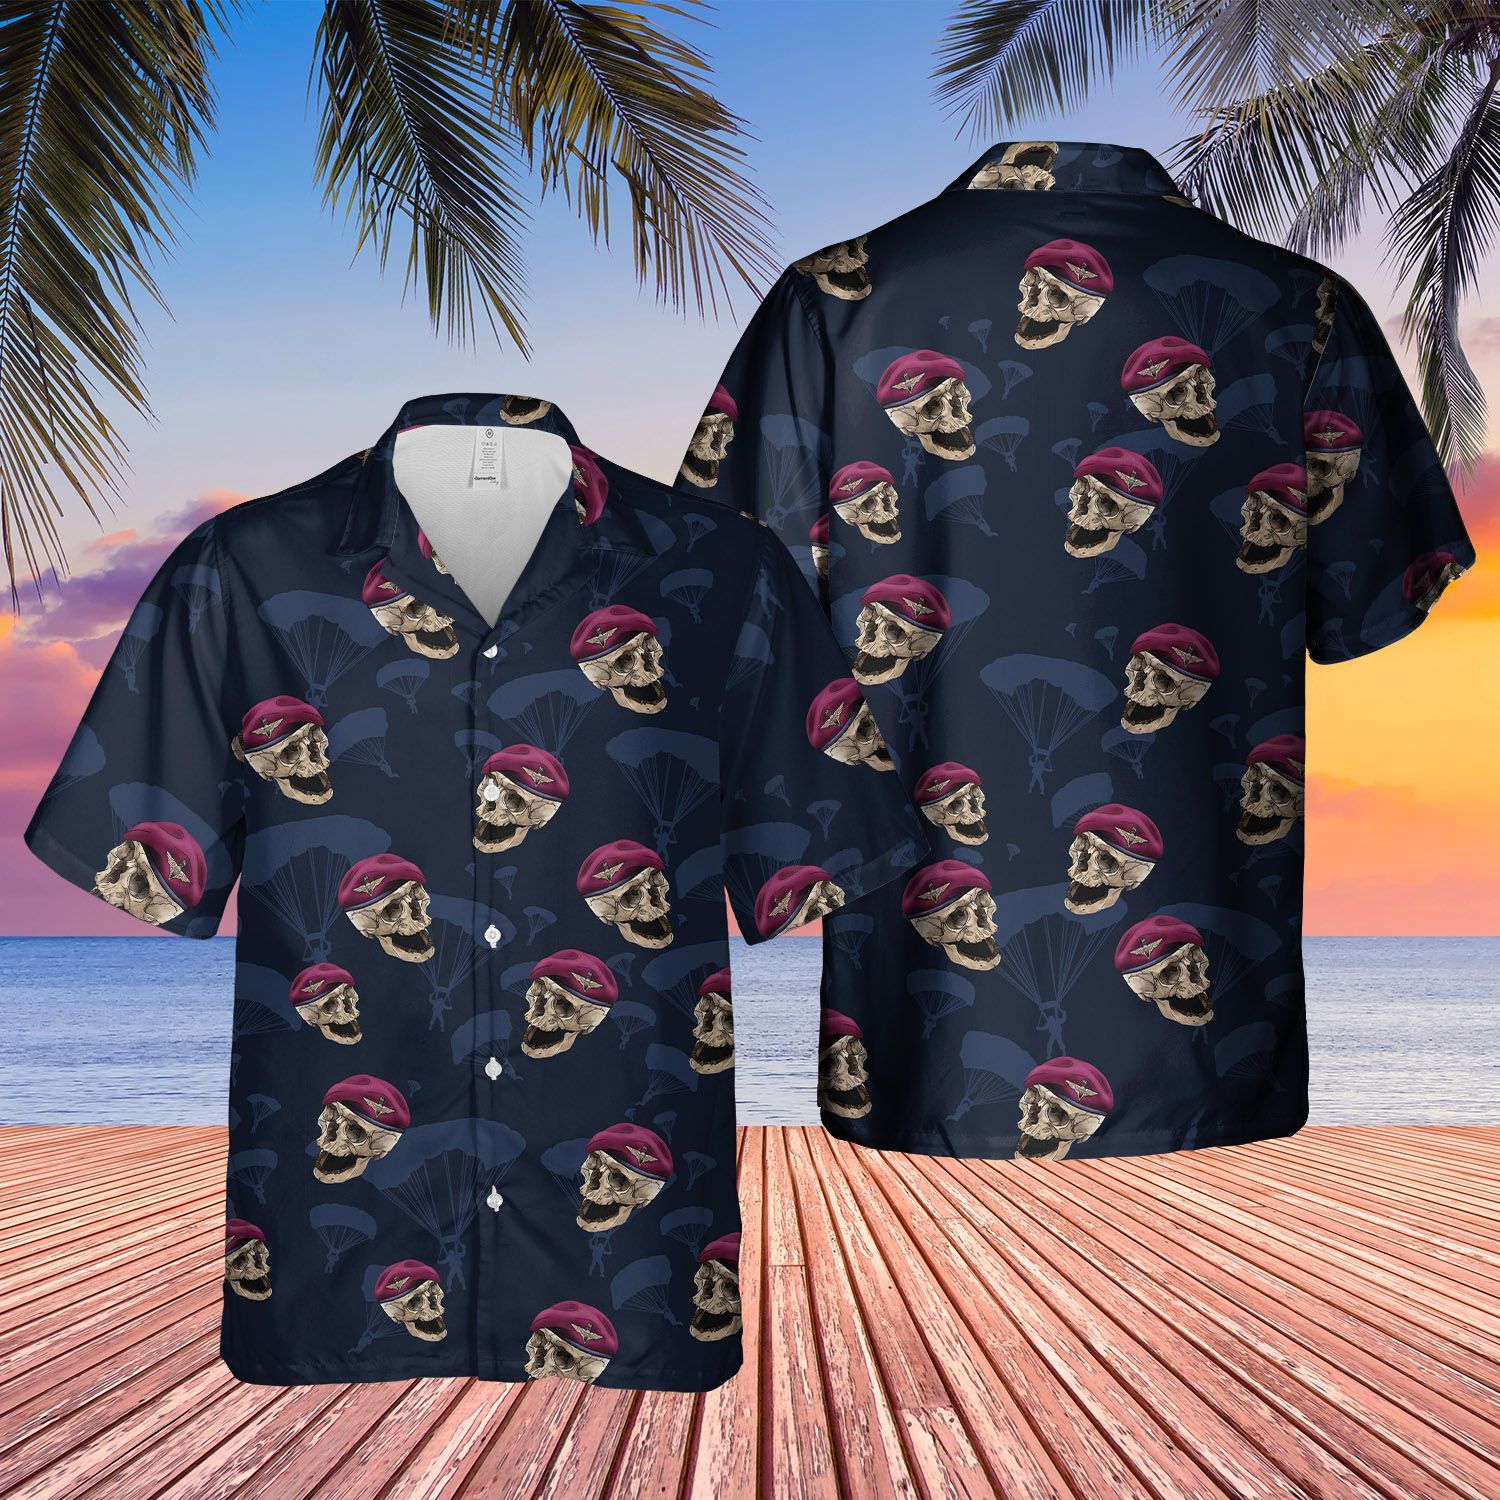 Enjoy your summer with top cool hawaiian shirt below 7